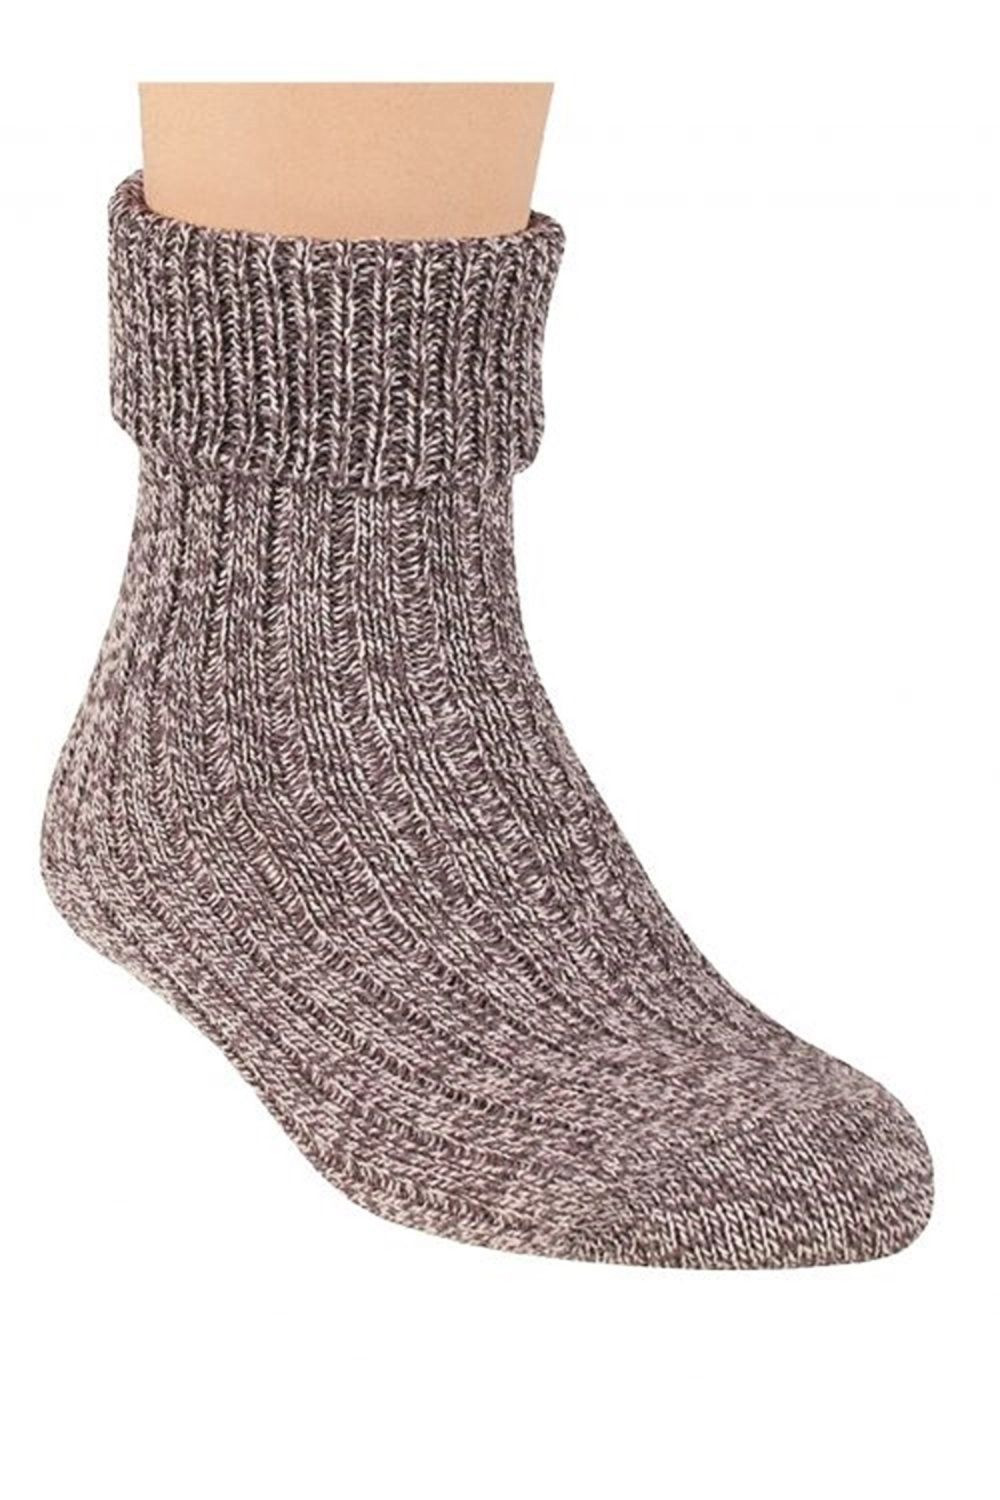 E-shop Dámské ponožky 067 beige - Steven